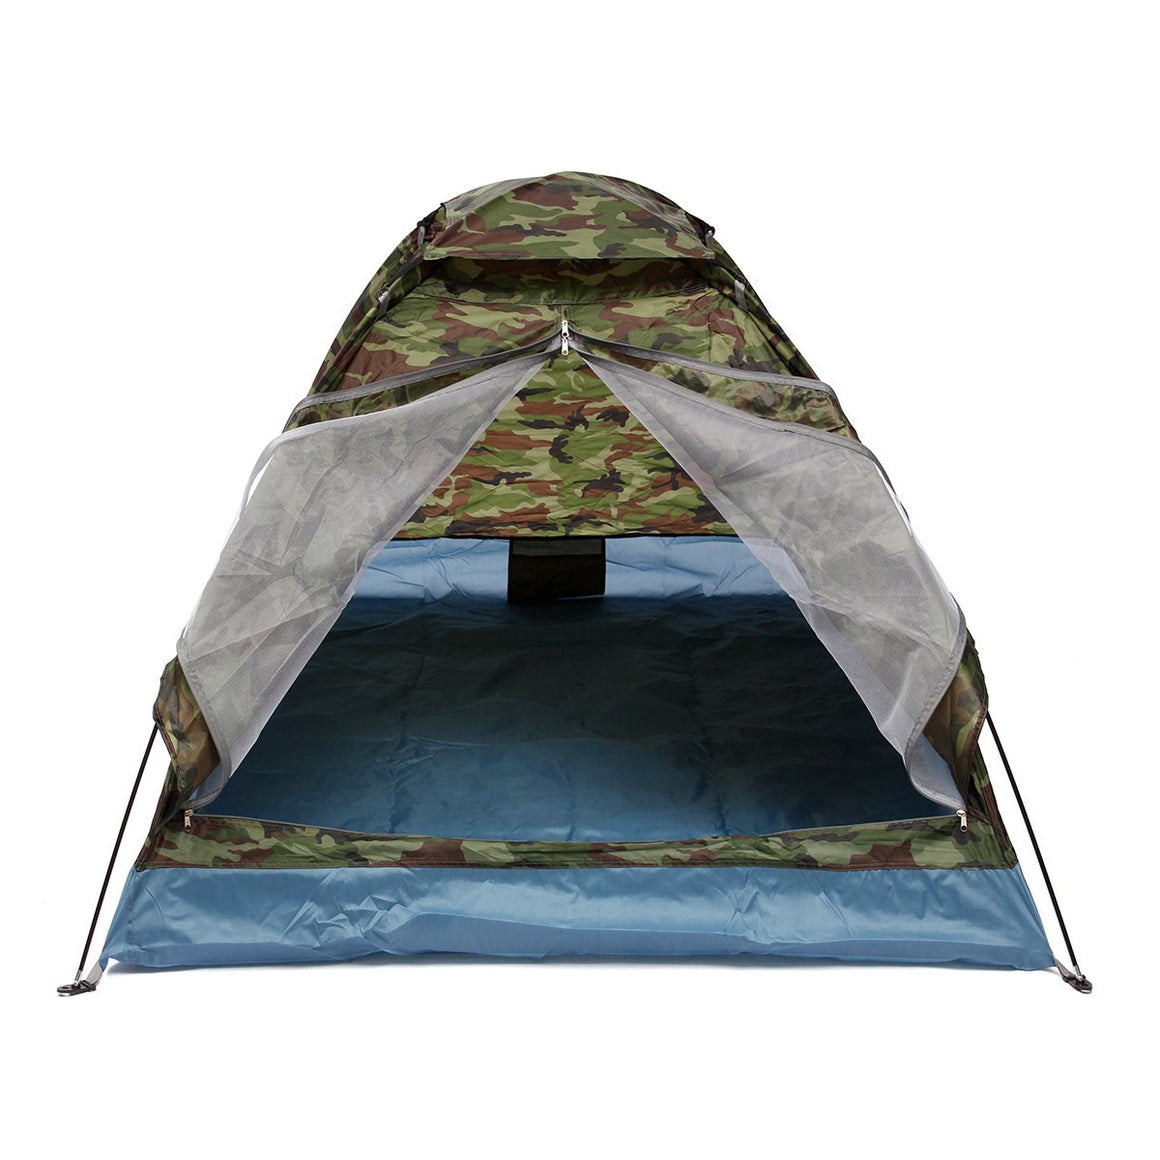 Waterproof Camouflage Hiking Tent